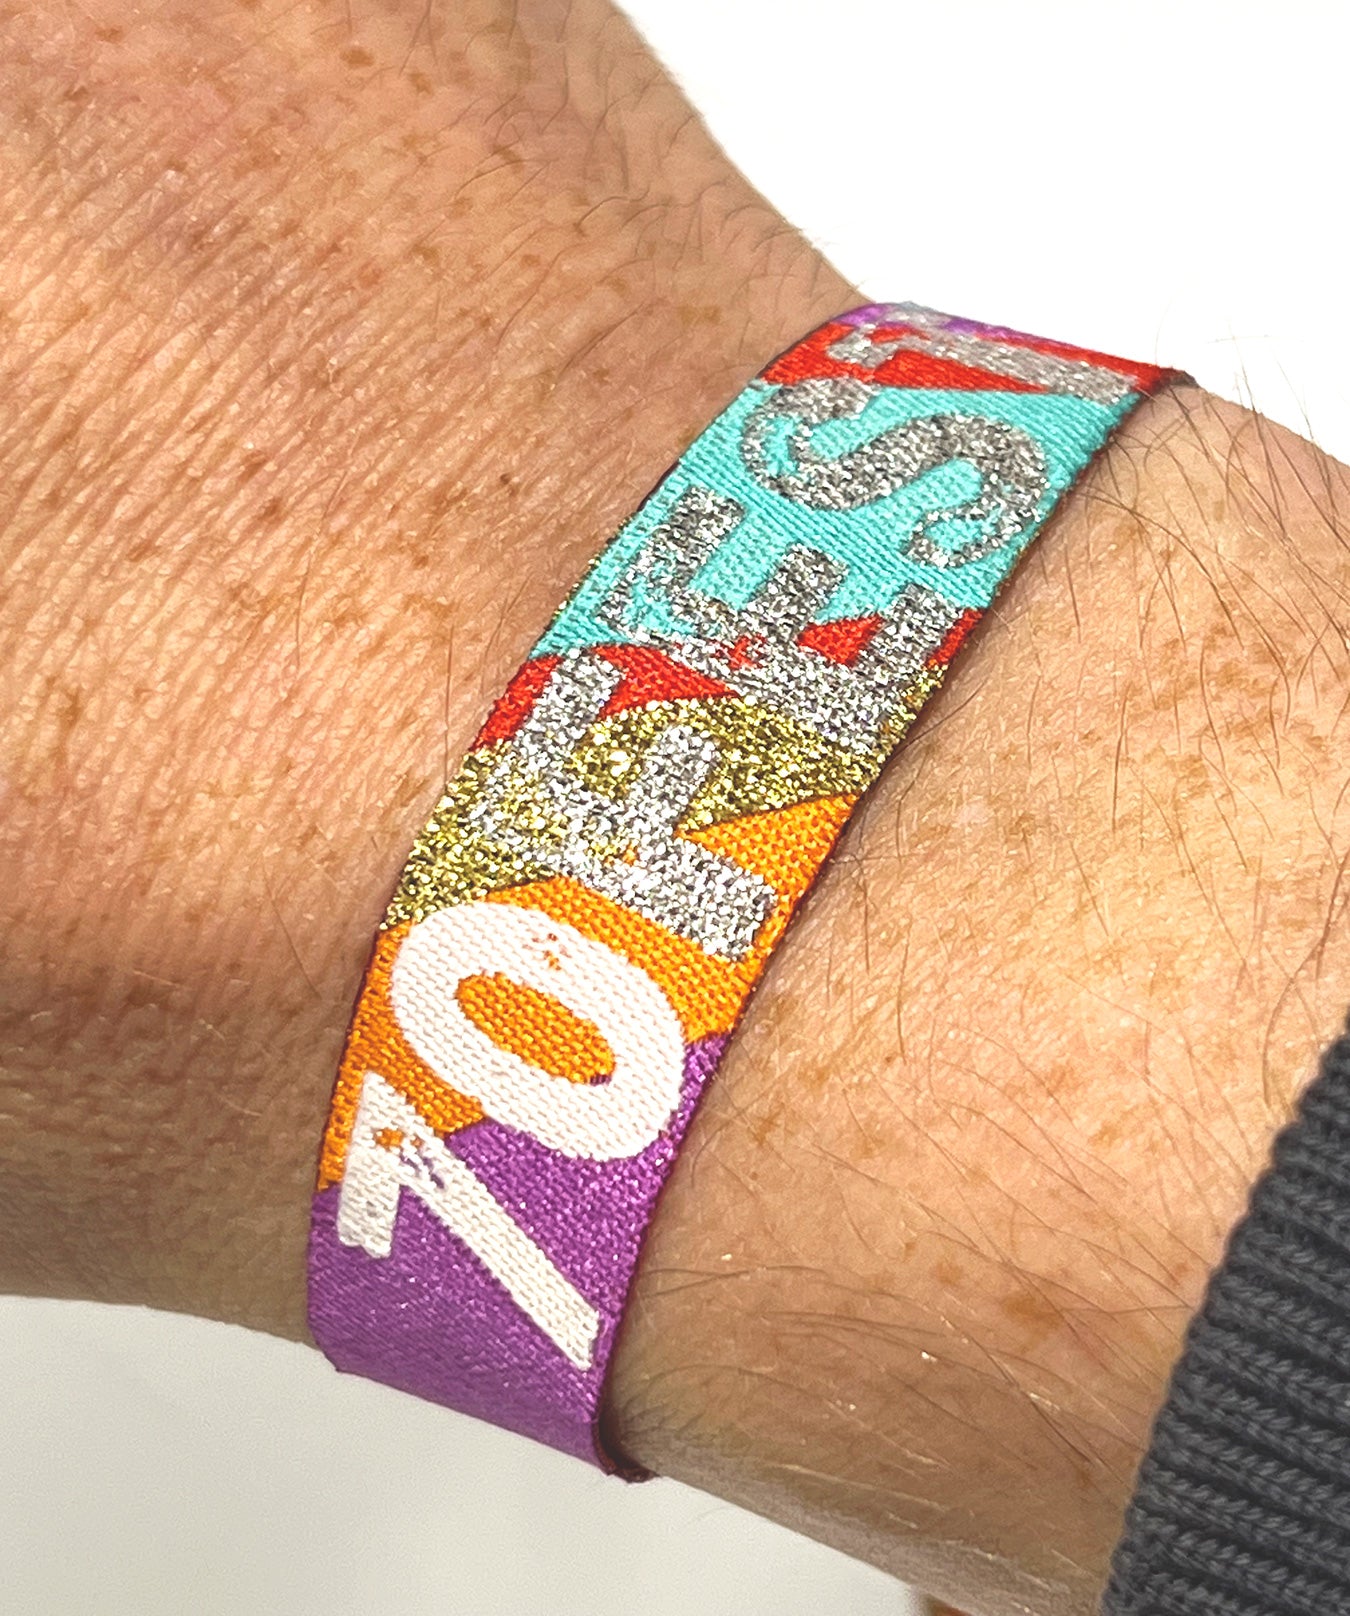 70fest festival 70th birthday wristband displayed on wrist